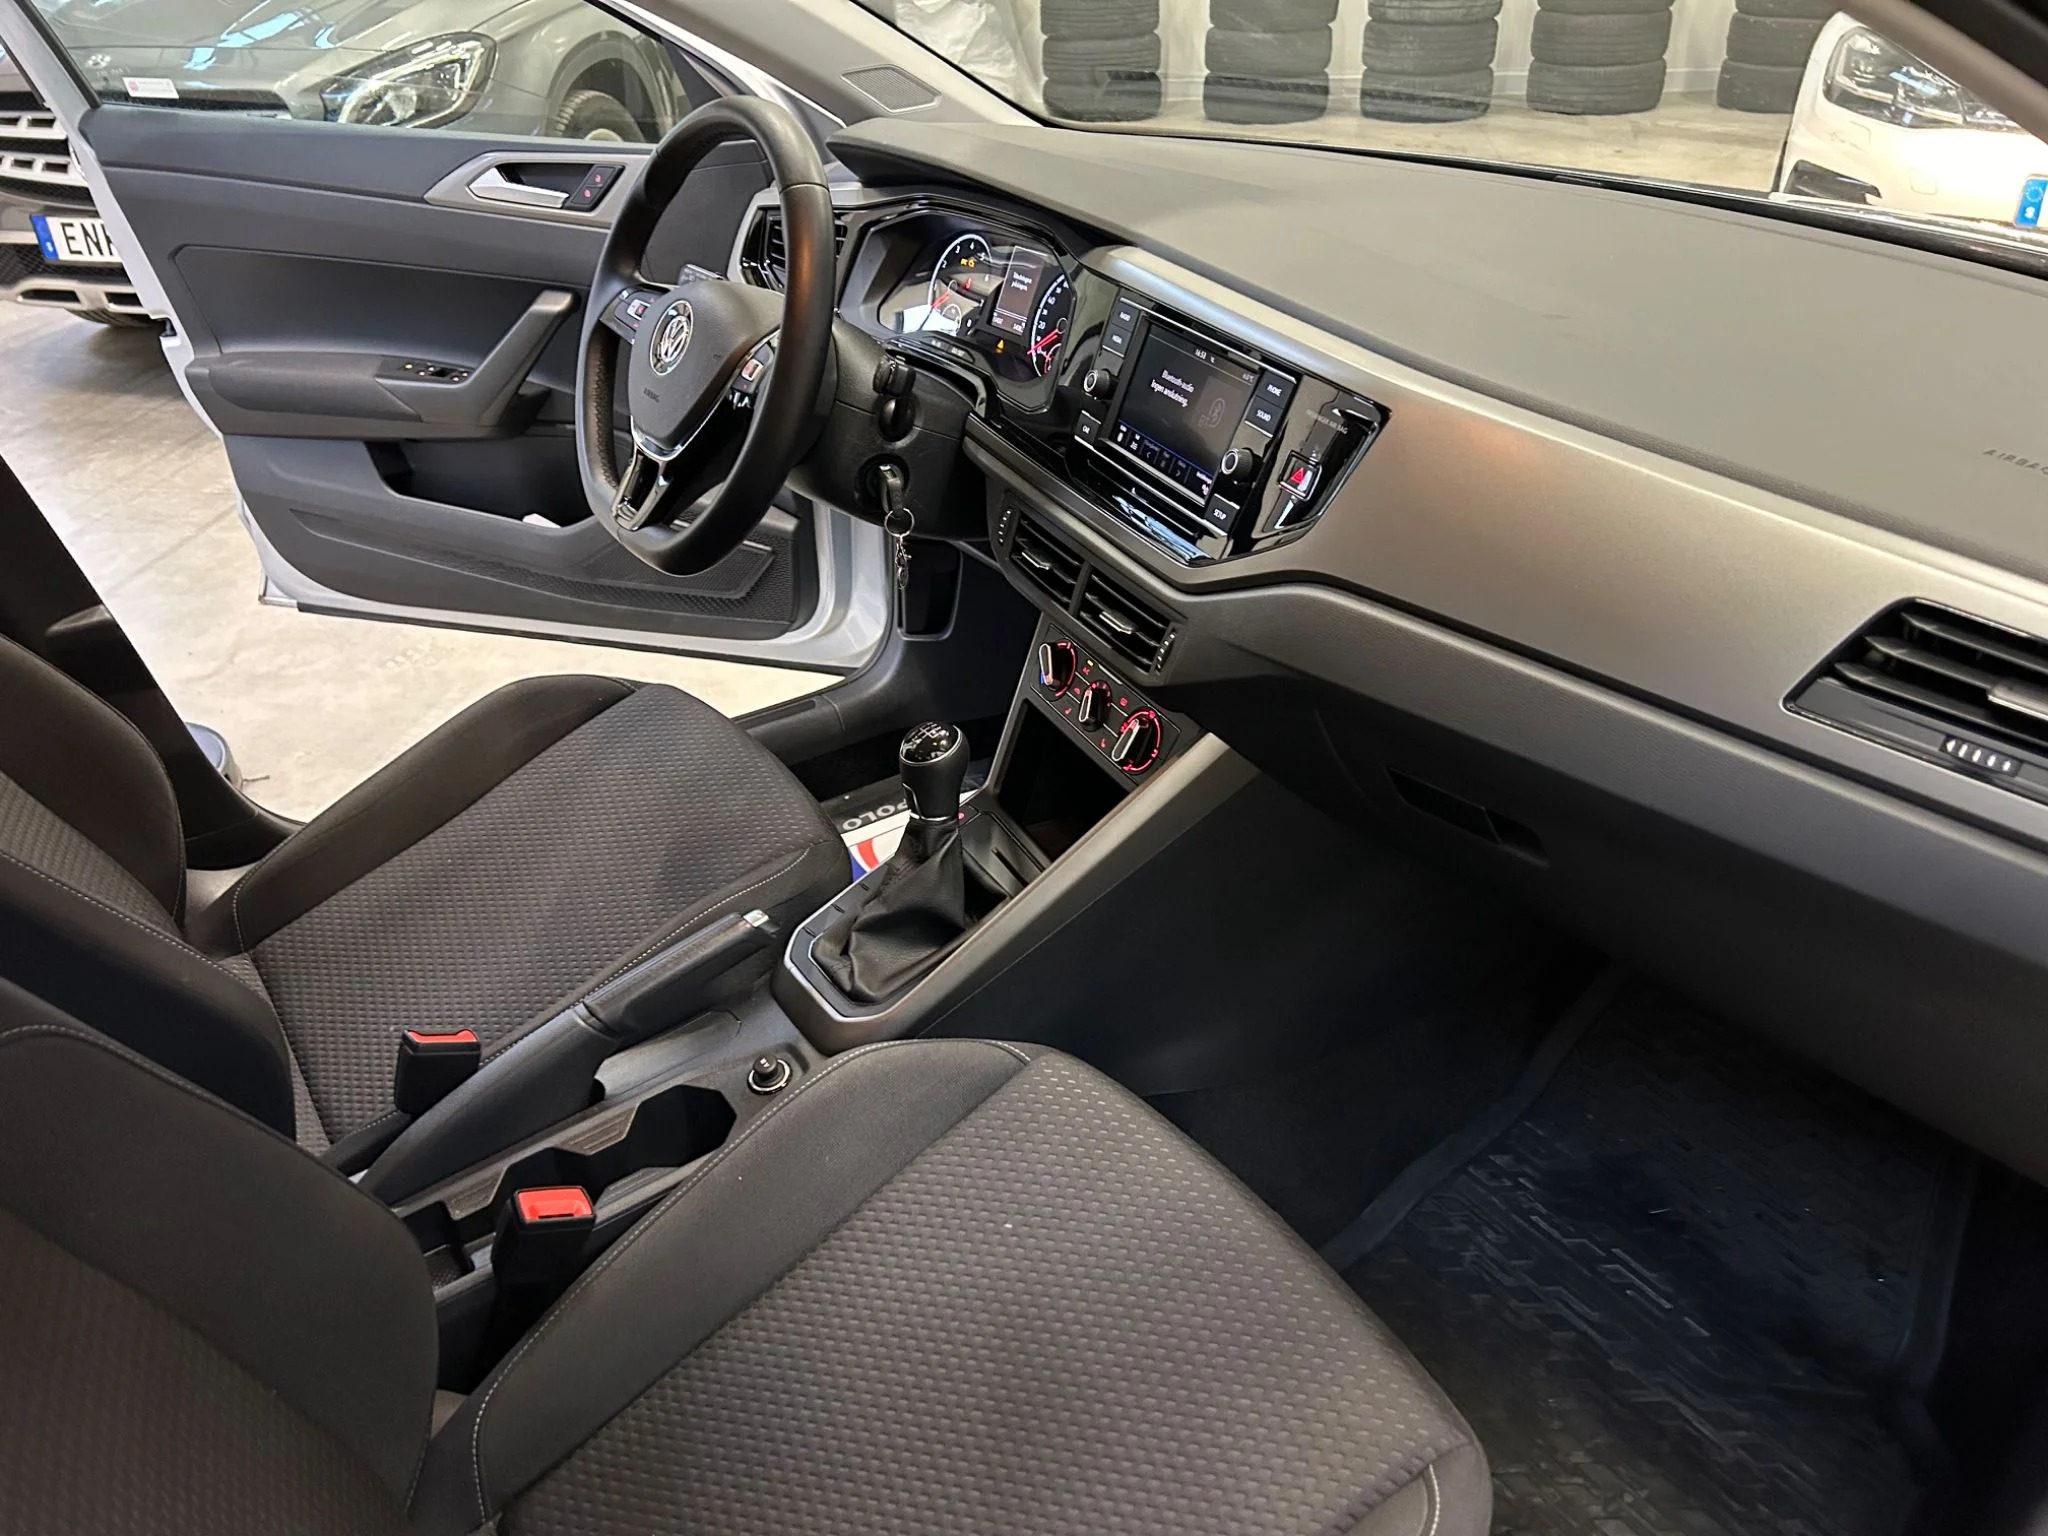 Volkswagen Polo 1.0 TSI BlueMotion Manuell, 95hk, 2019